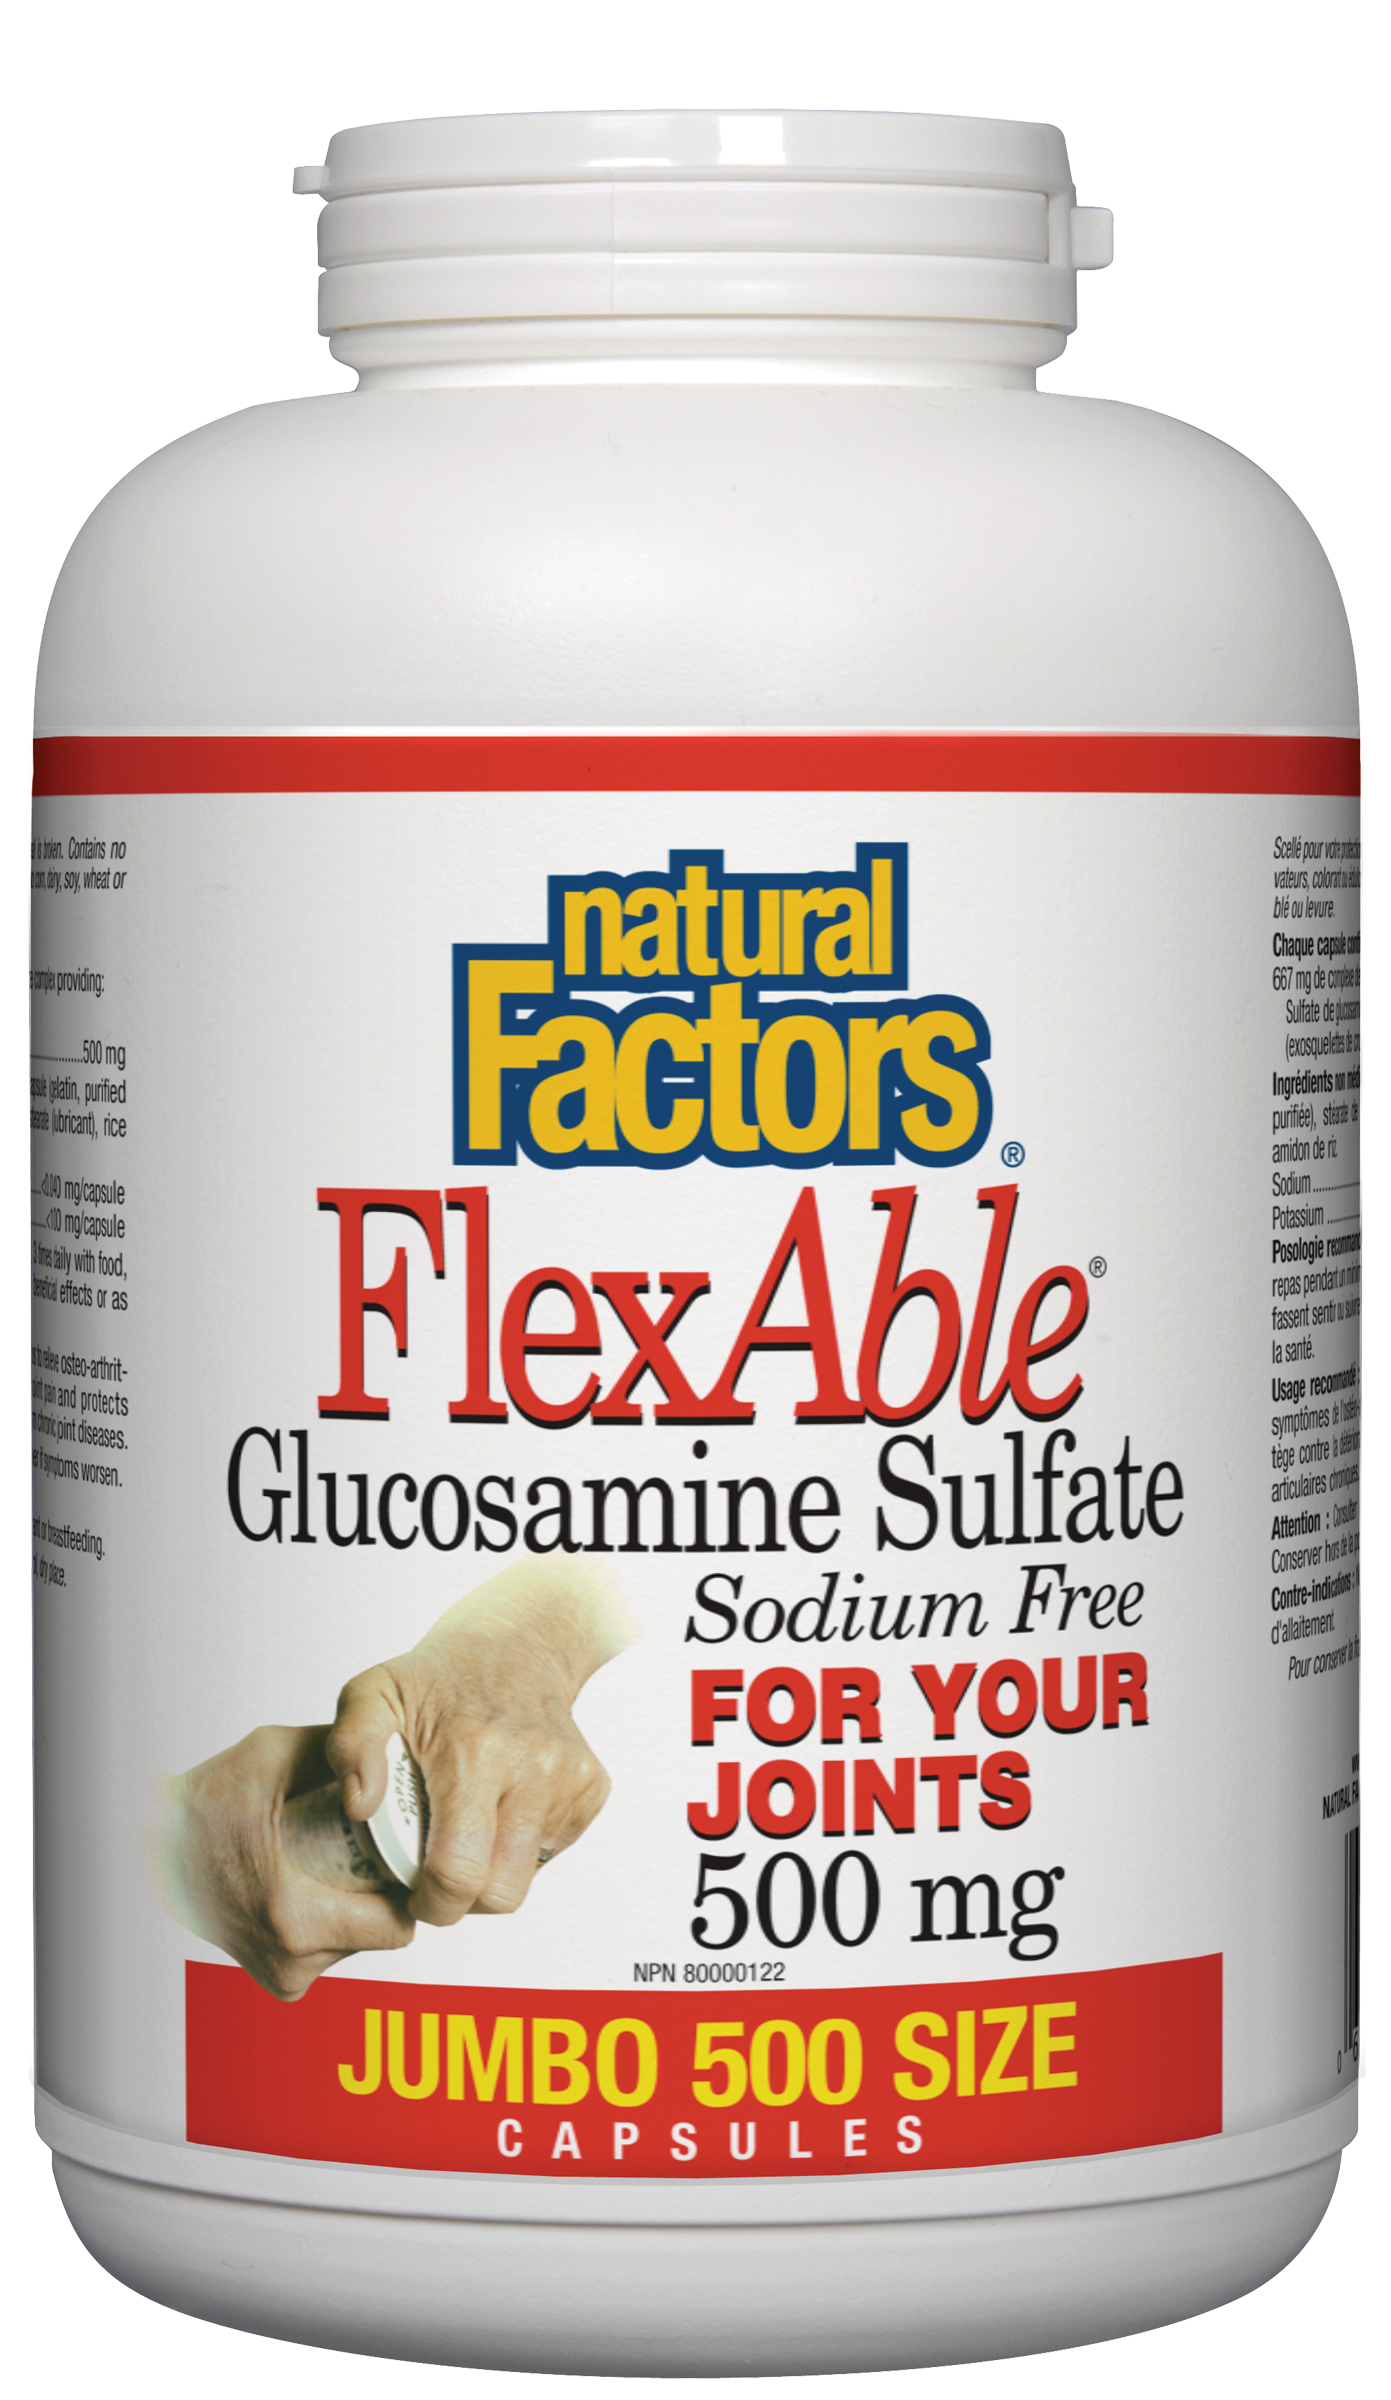 Natural Factors FlexAble Glucosamine Sulfate 500mg Jumbo 500 Size Capsules